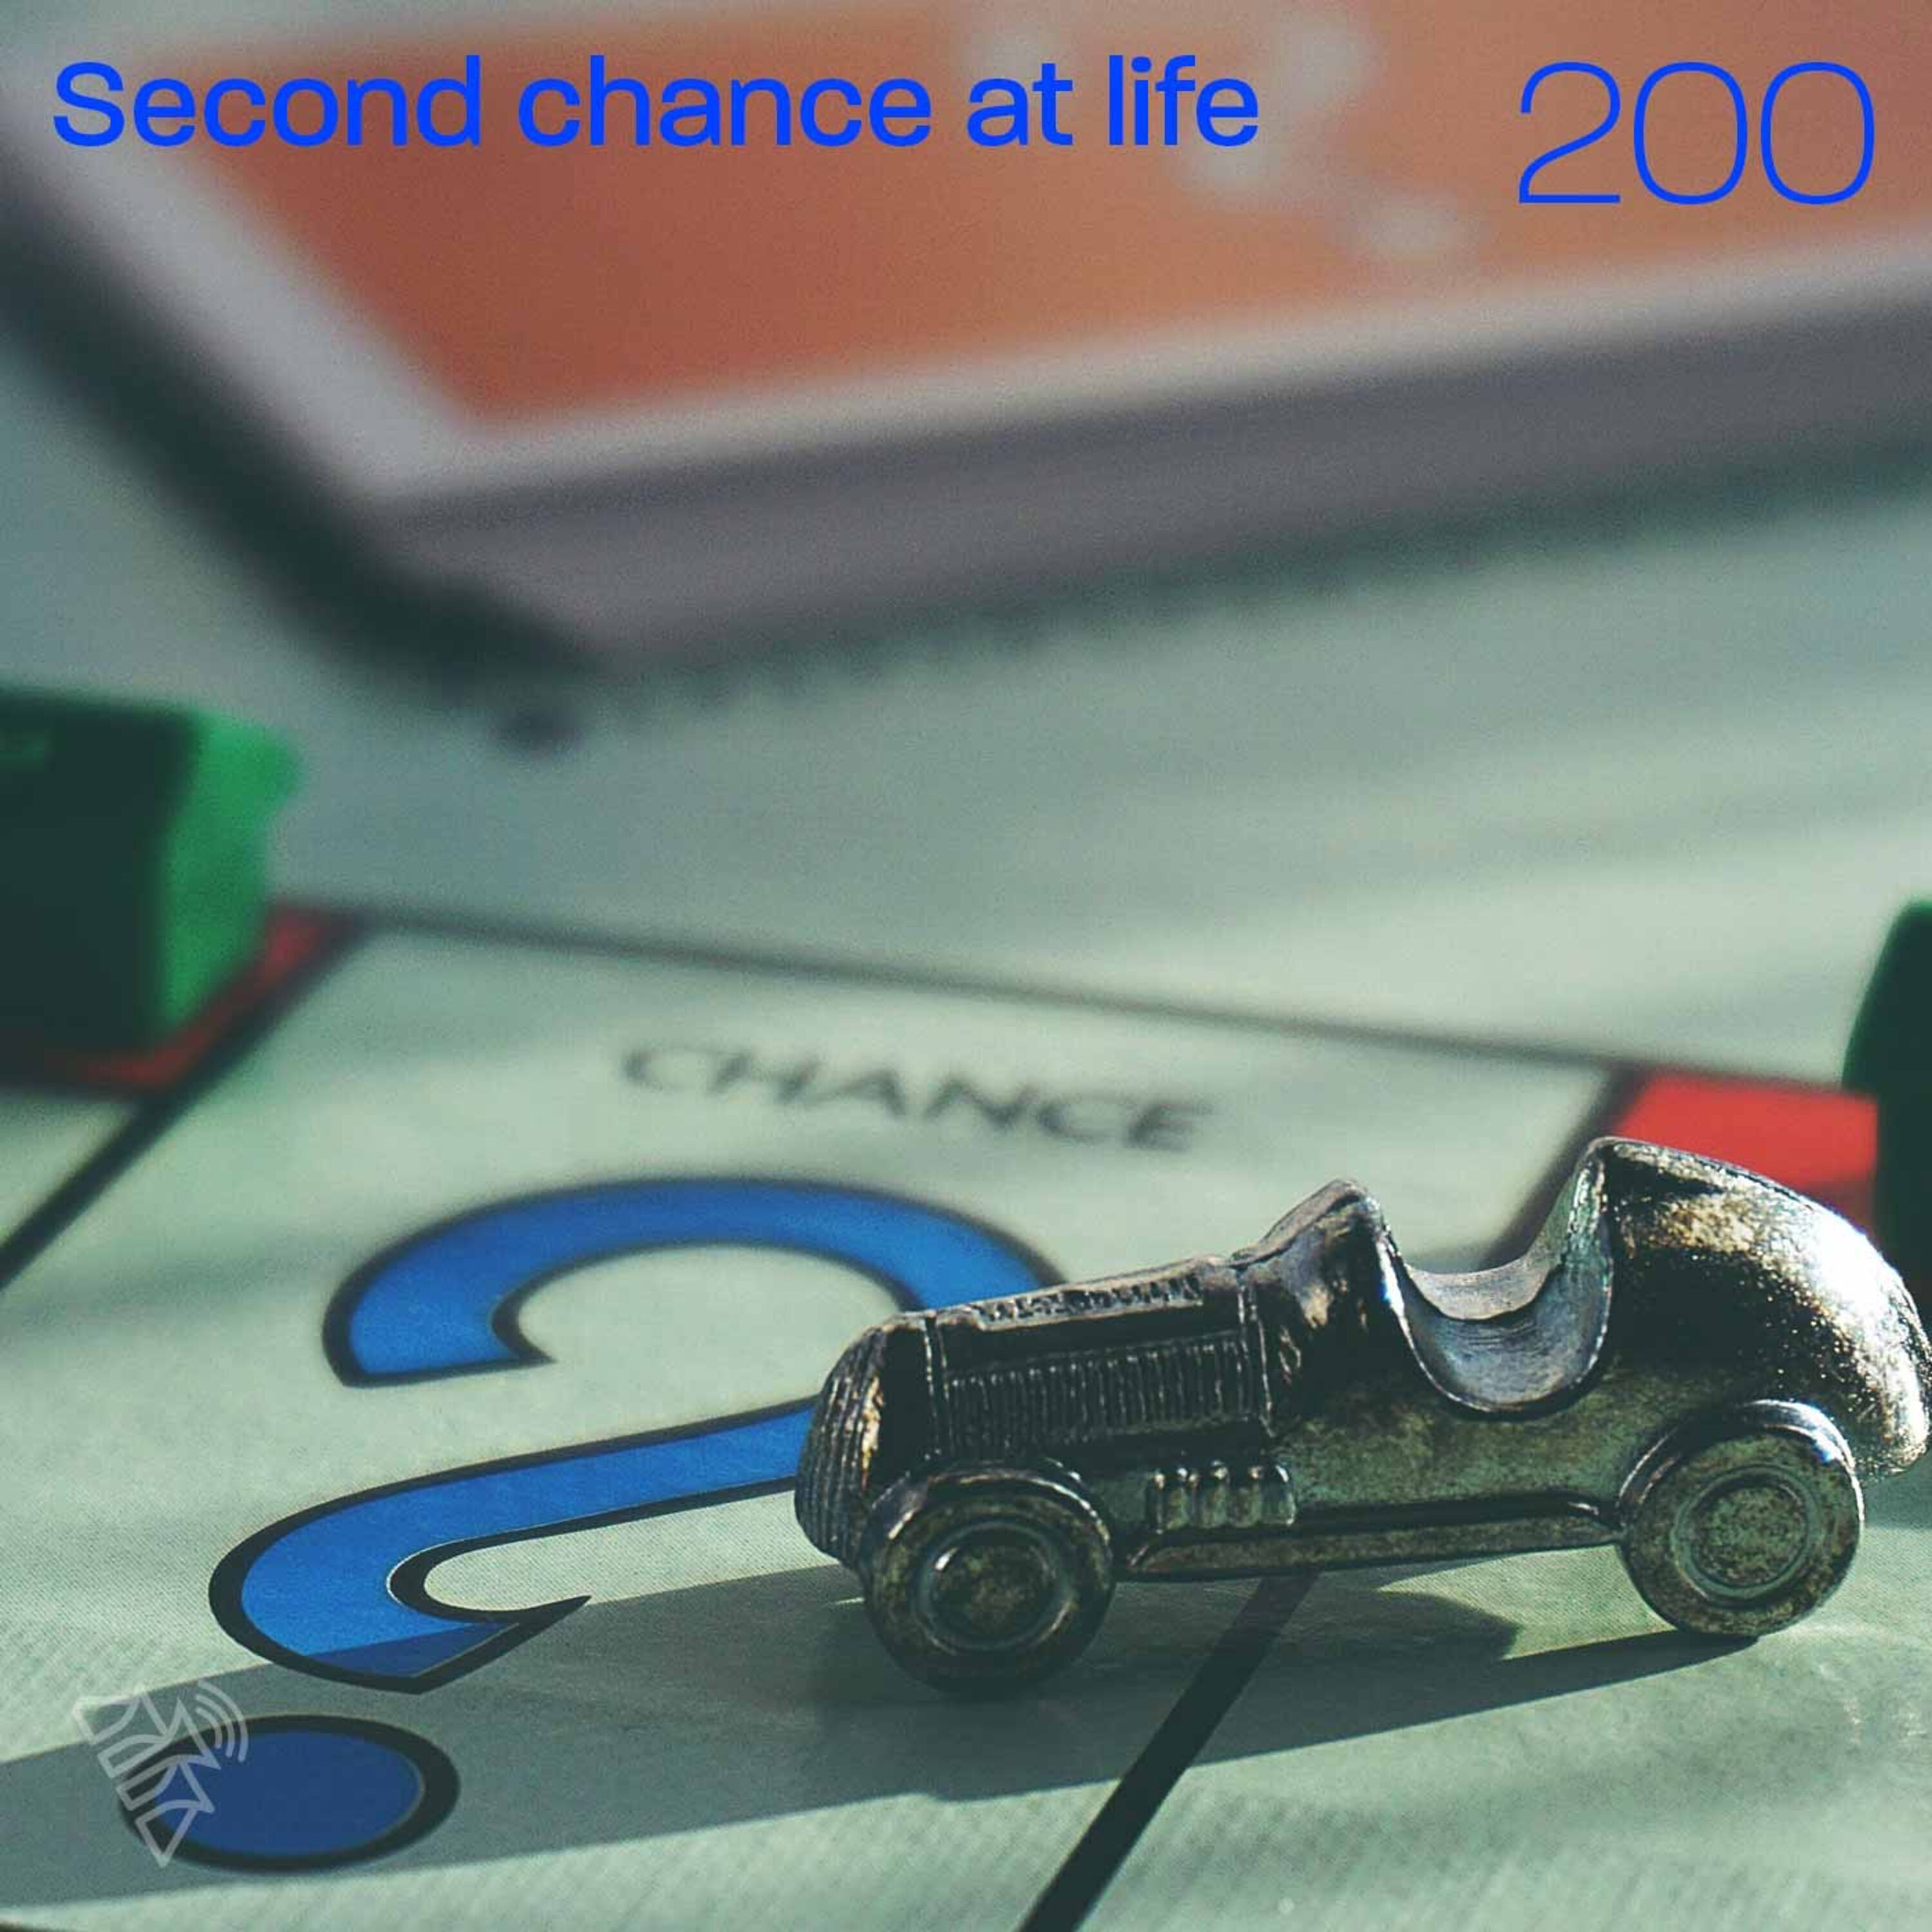 Second chance at life - Pr Chris Kernahan - 200